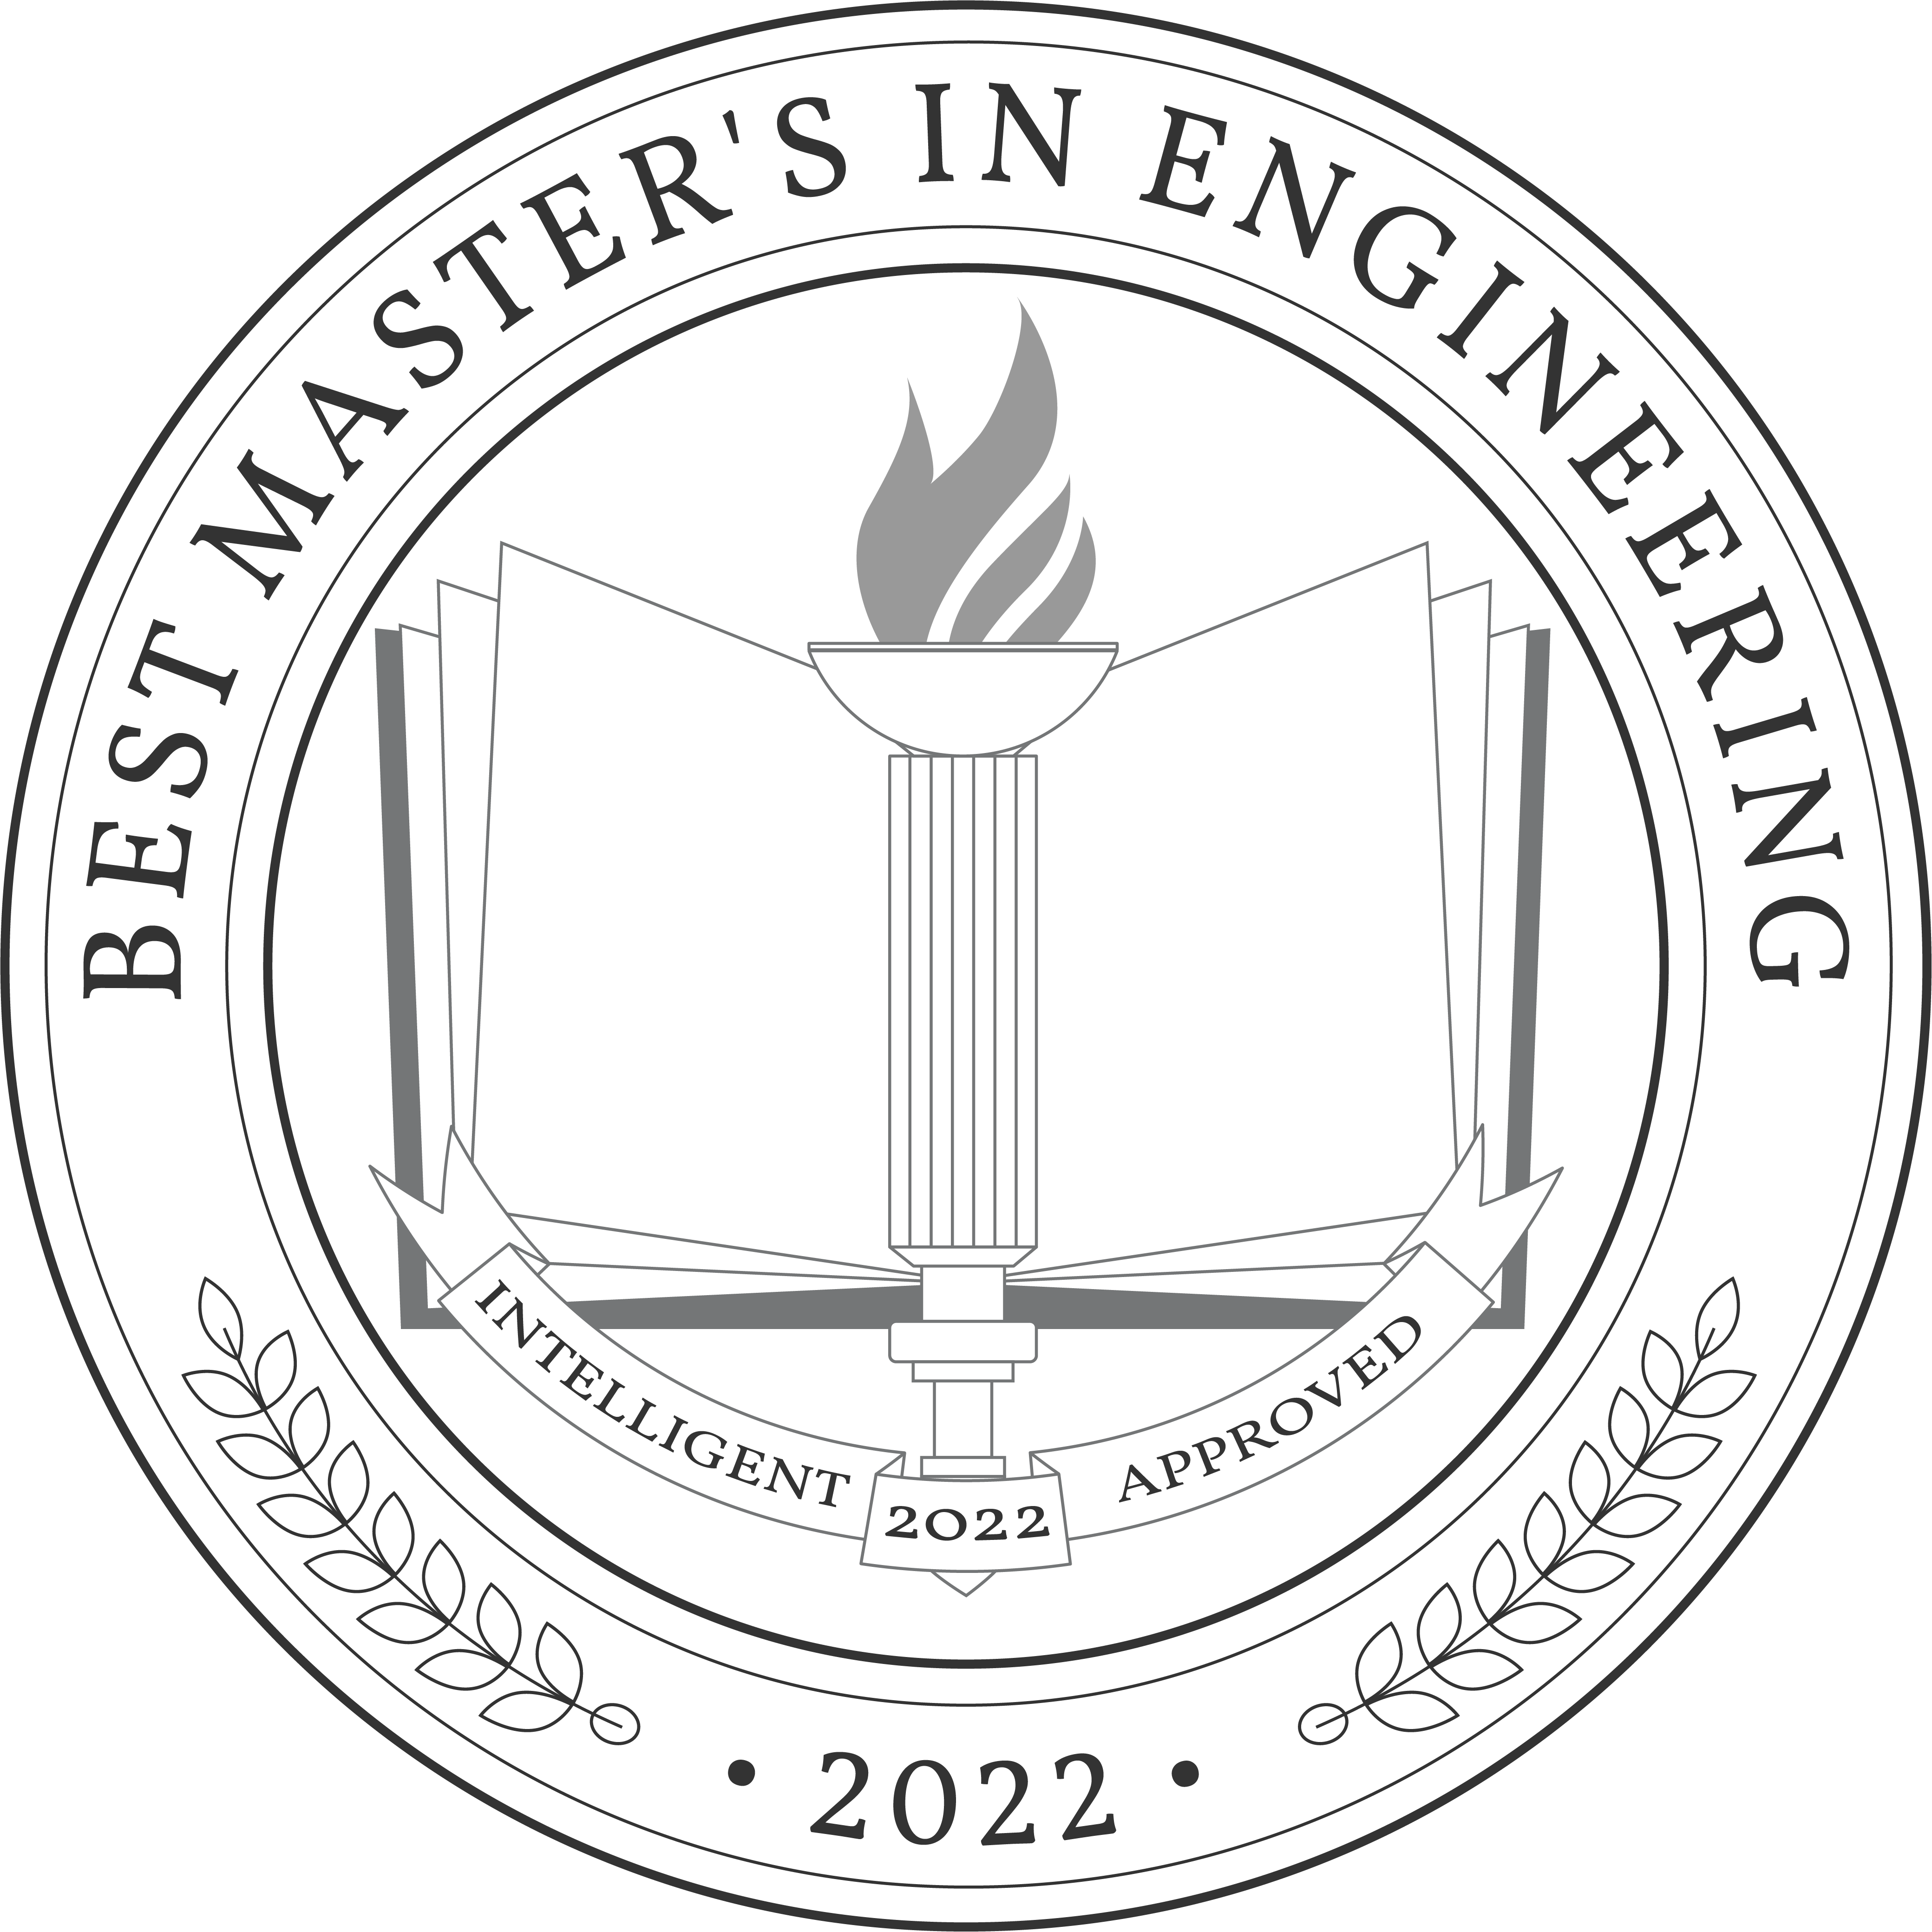 Best Master's in Engineering Degree Programs